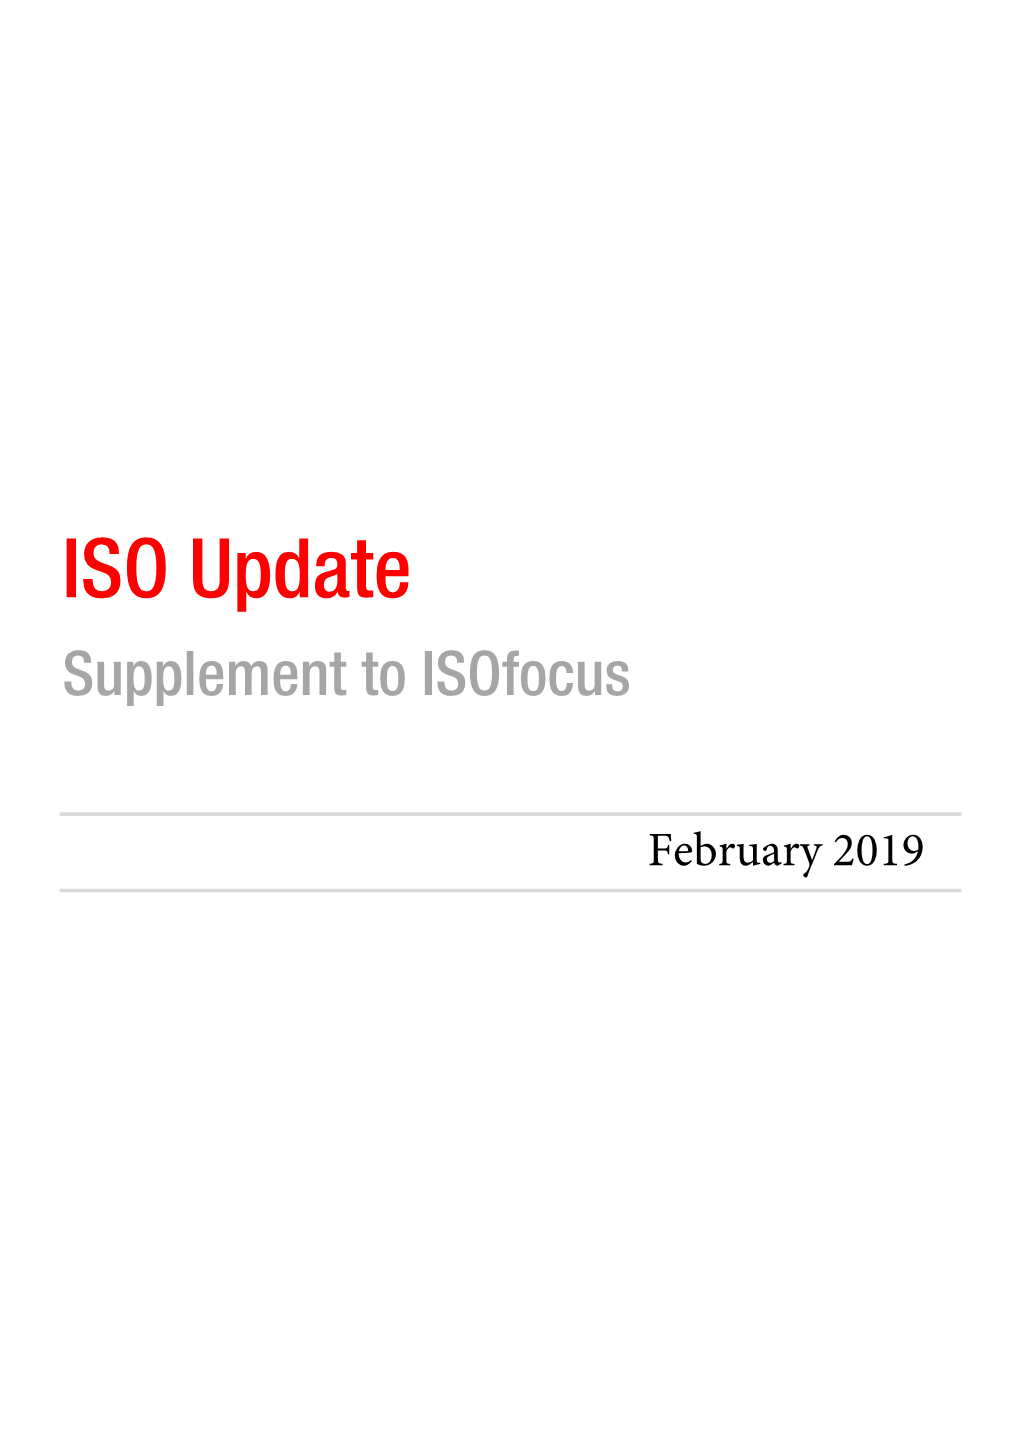 ISO Update February 2019